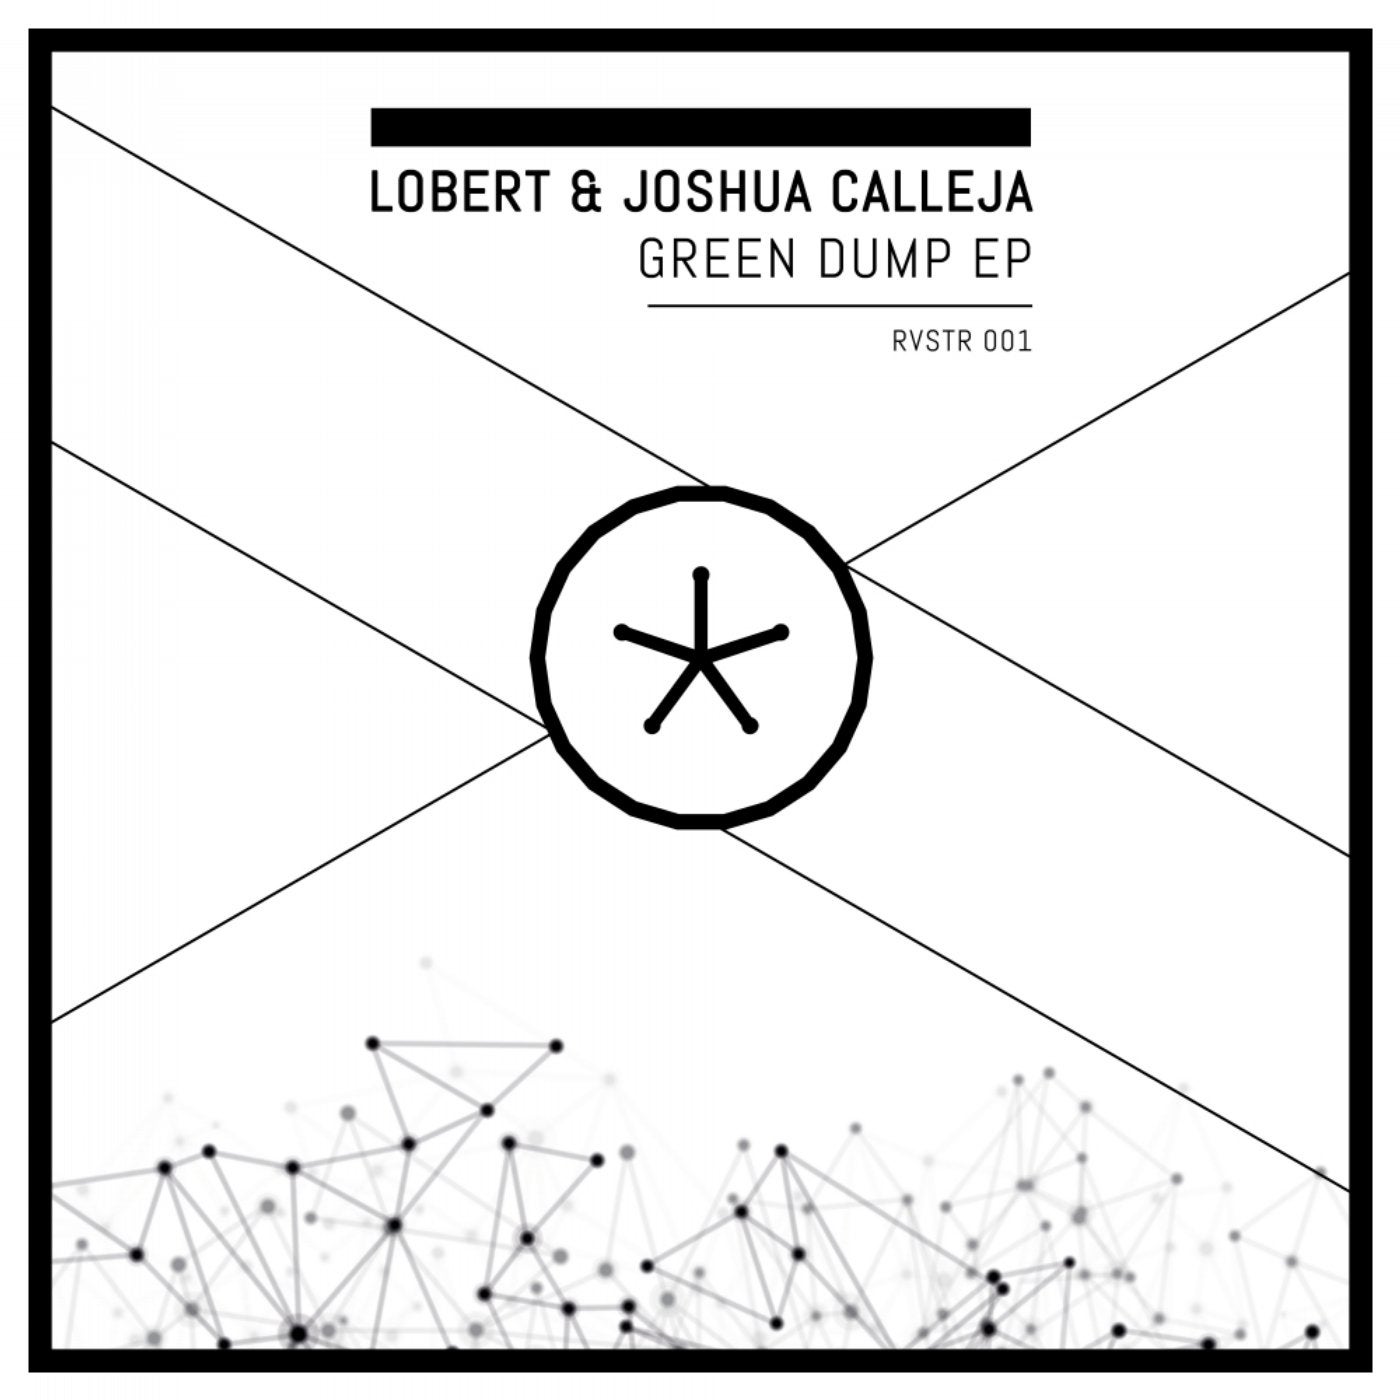 Green Dump EP